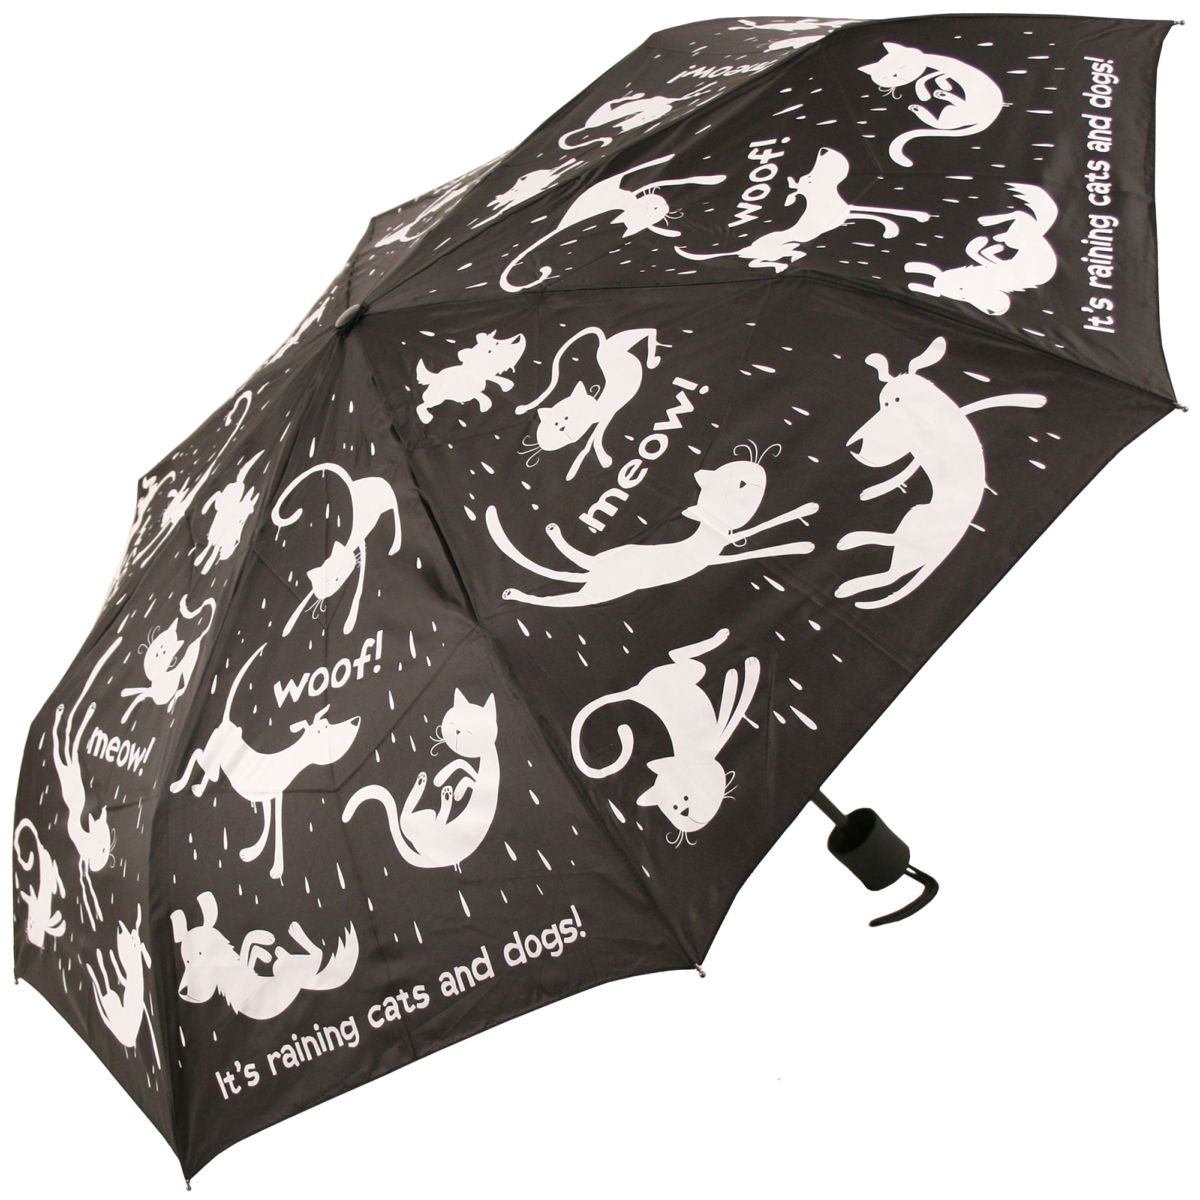 Black & white It's raining cats and dogs Folding Umbrella 